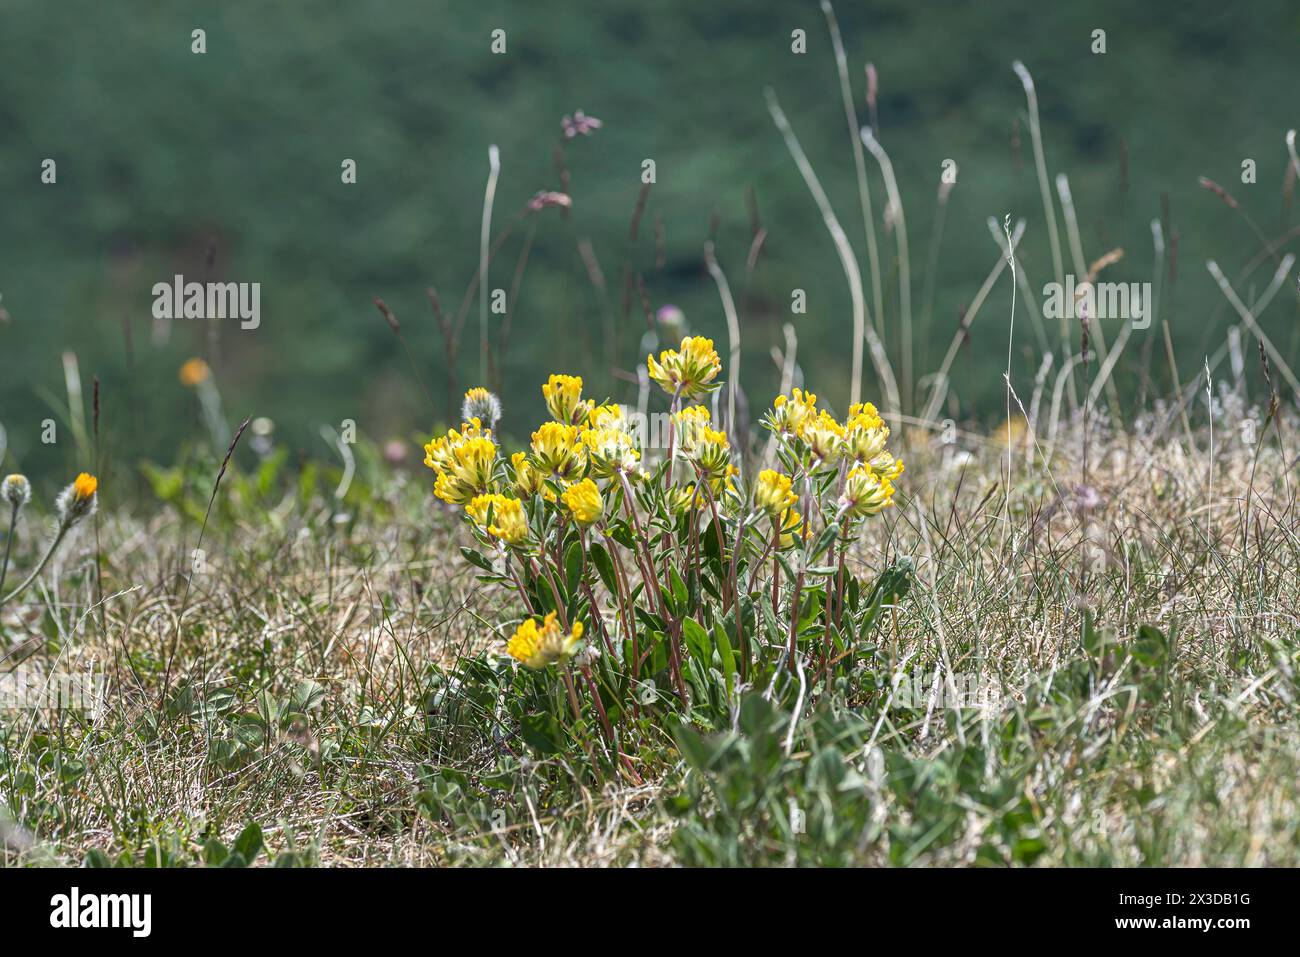 Common kidneyvetch, Kidney vetch, Woundwort (Anthyllis vulneraria, Vulneraria heterophylla), blooming in a meadow, Germany, Bundesrepublik Deutschland Stock Photo